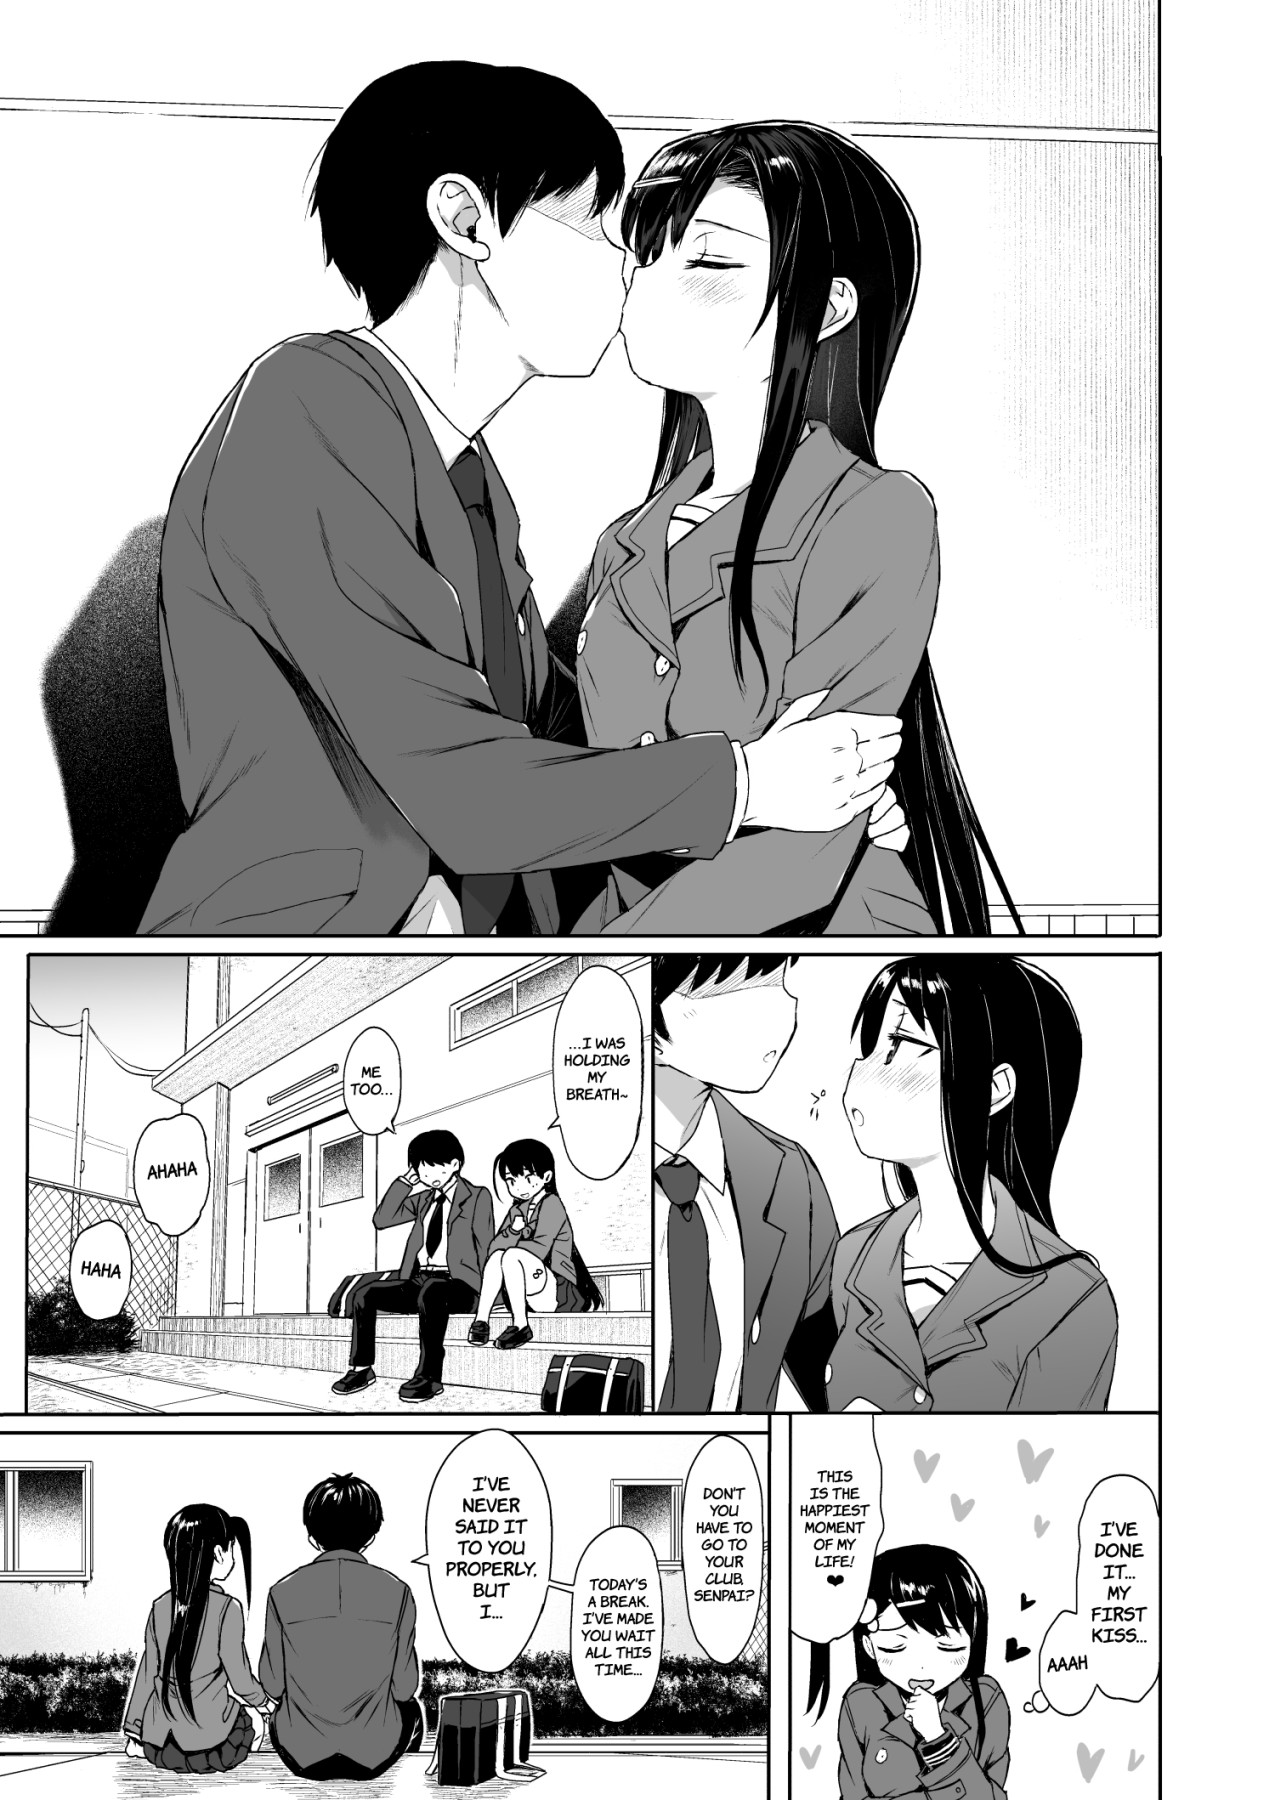 Hentai Manga Comic-Teaching a Beautiful Young Girl Sex-Ed via Hypnosis 3-Read-2